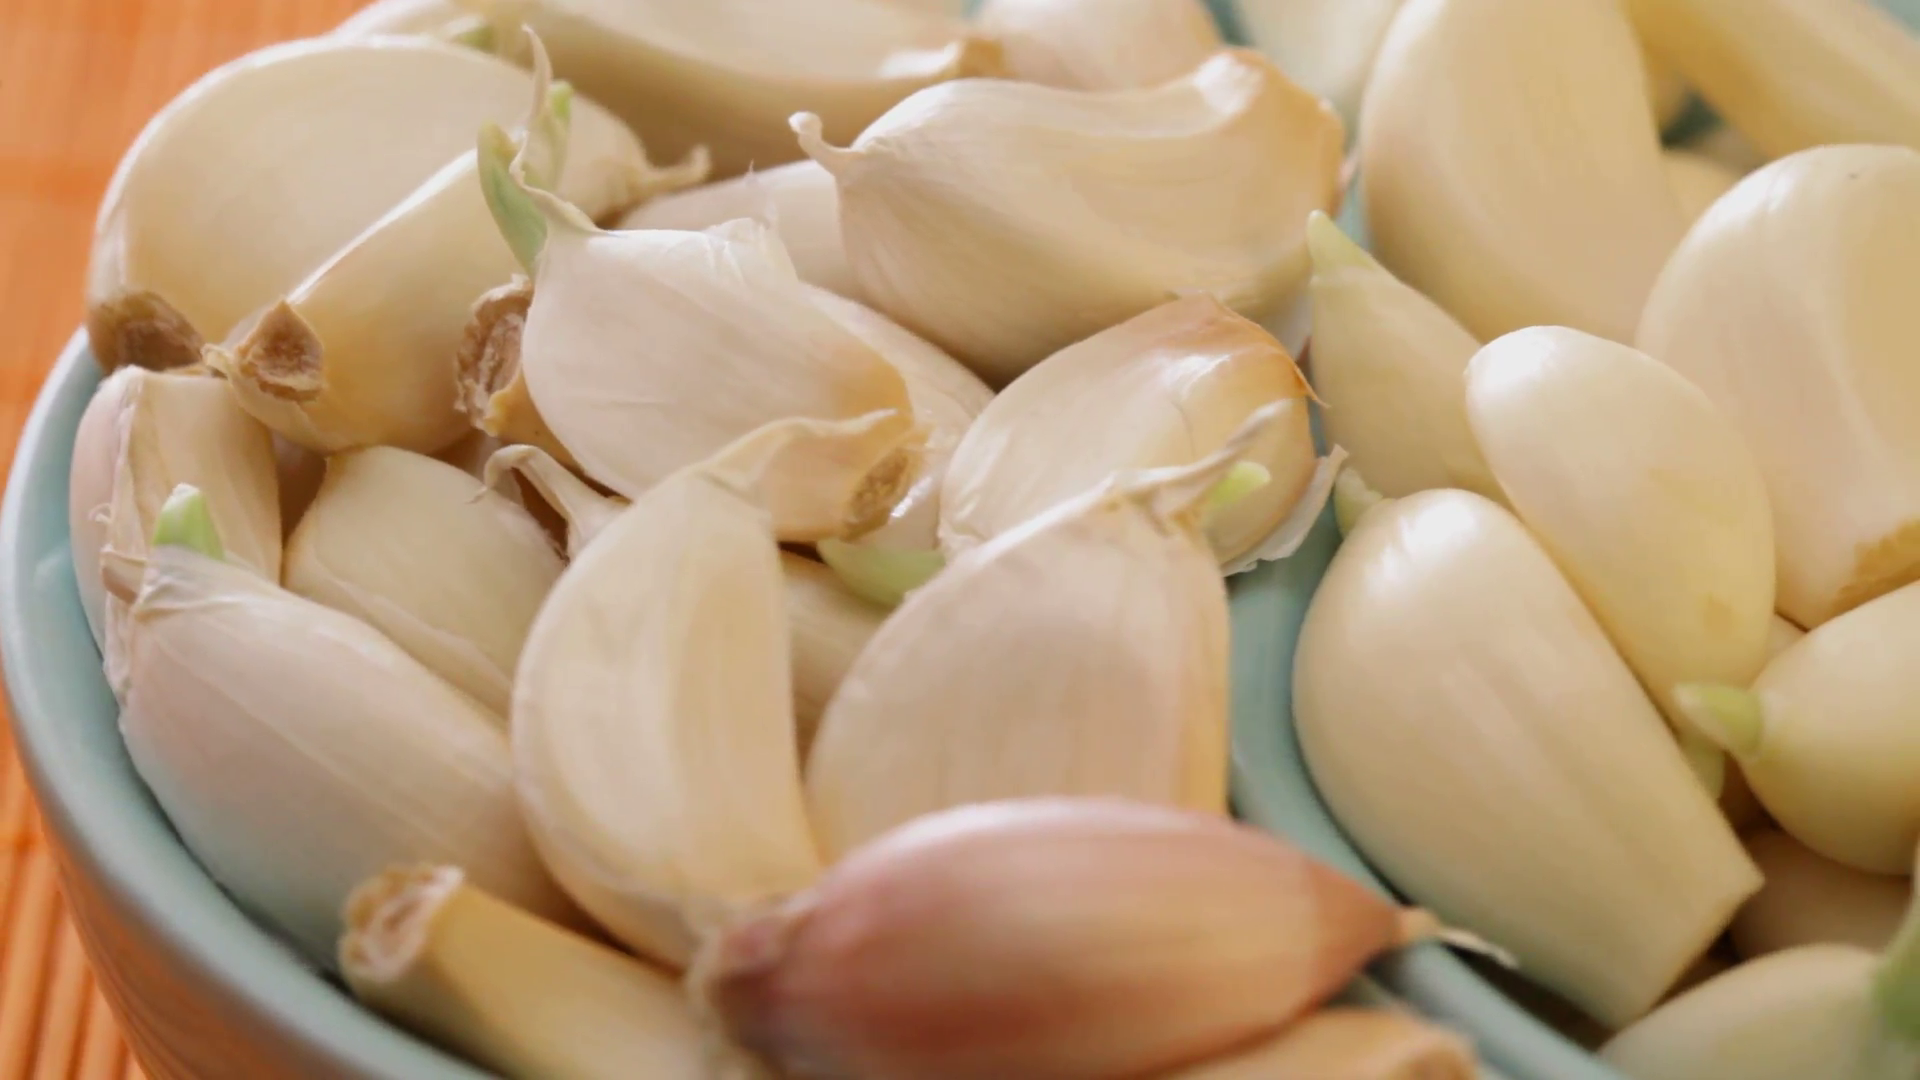 garlic-cloves-in-bowl-on-rotating-display-close-up_vkms-qpb__F0000